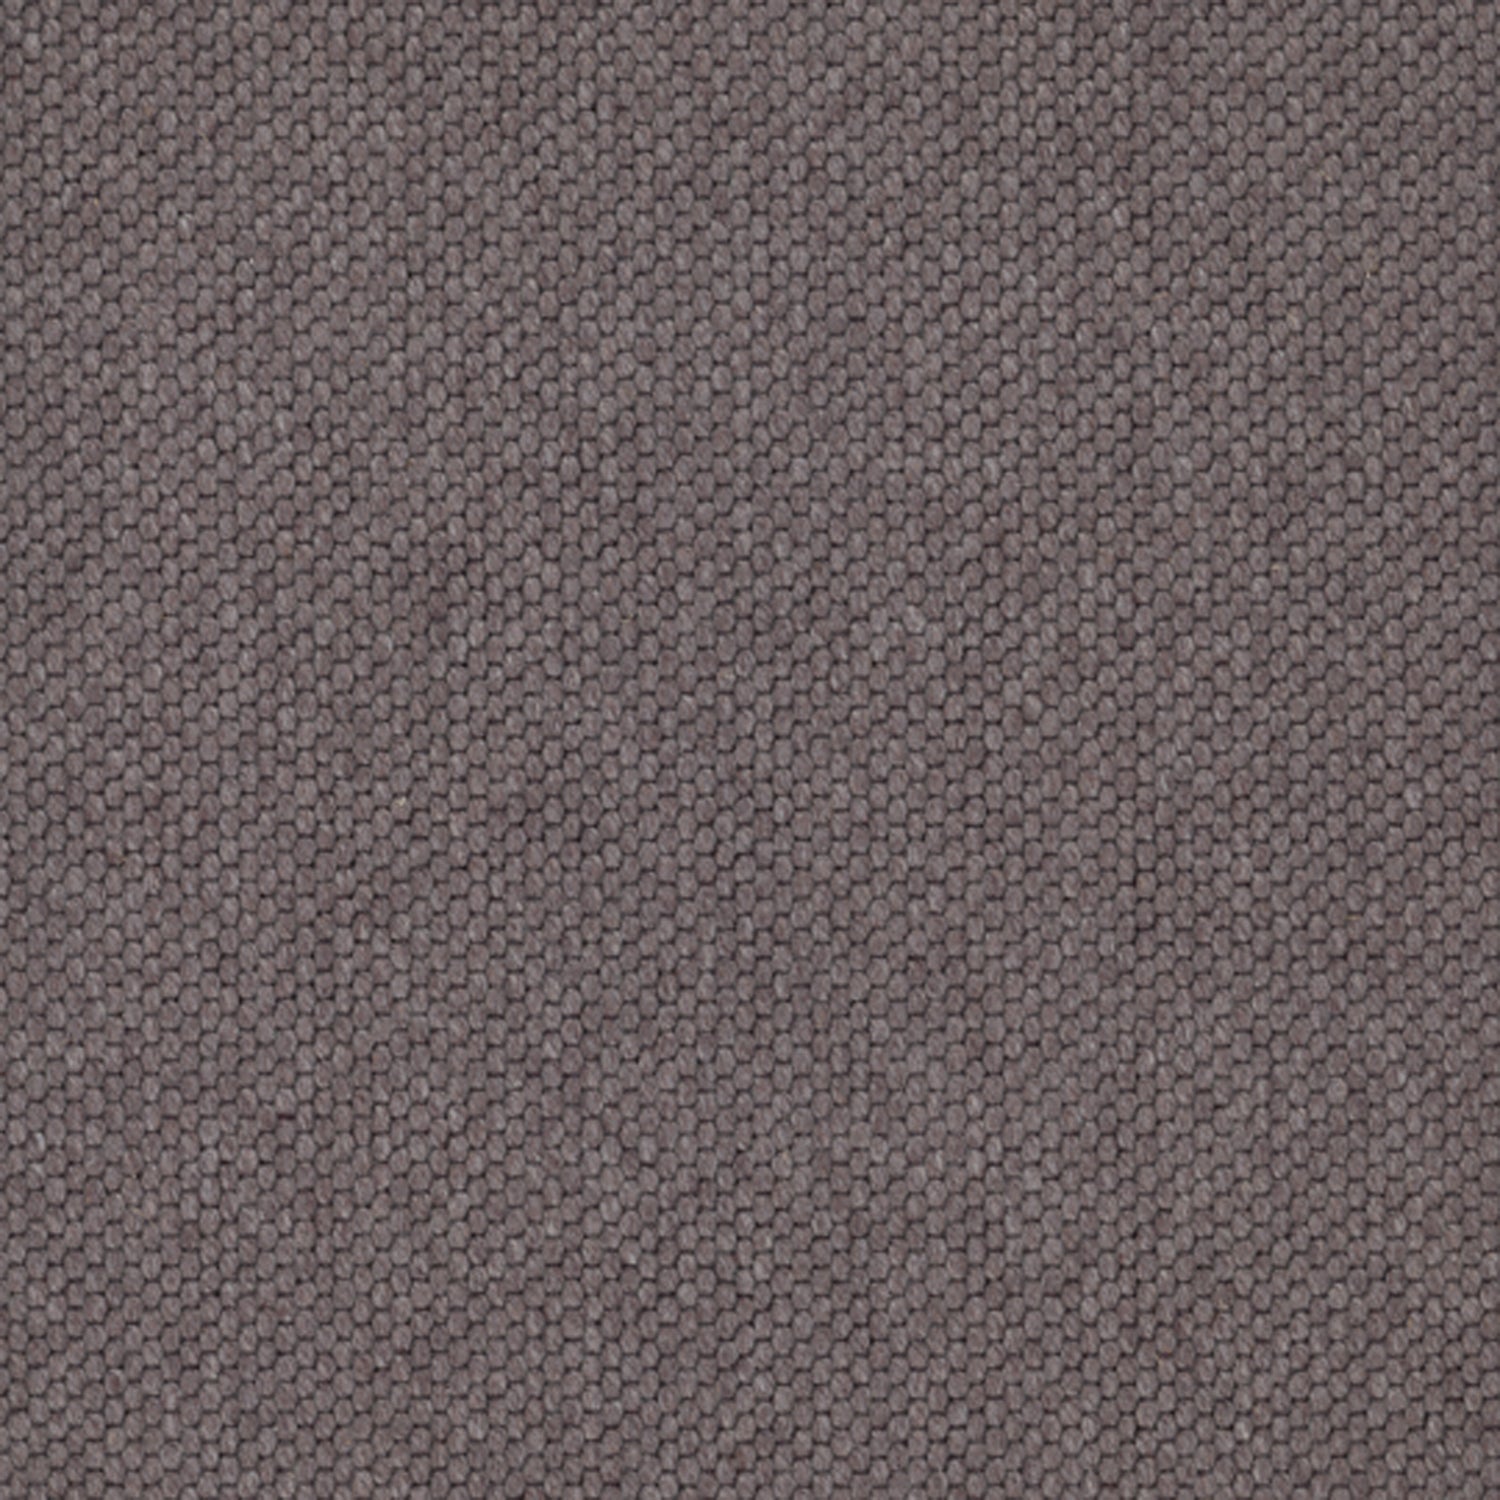 Wool broadloom carpet swatch in a chunky grid weave in charcoal.